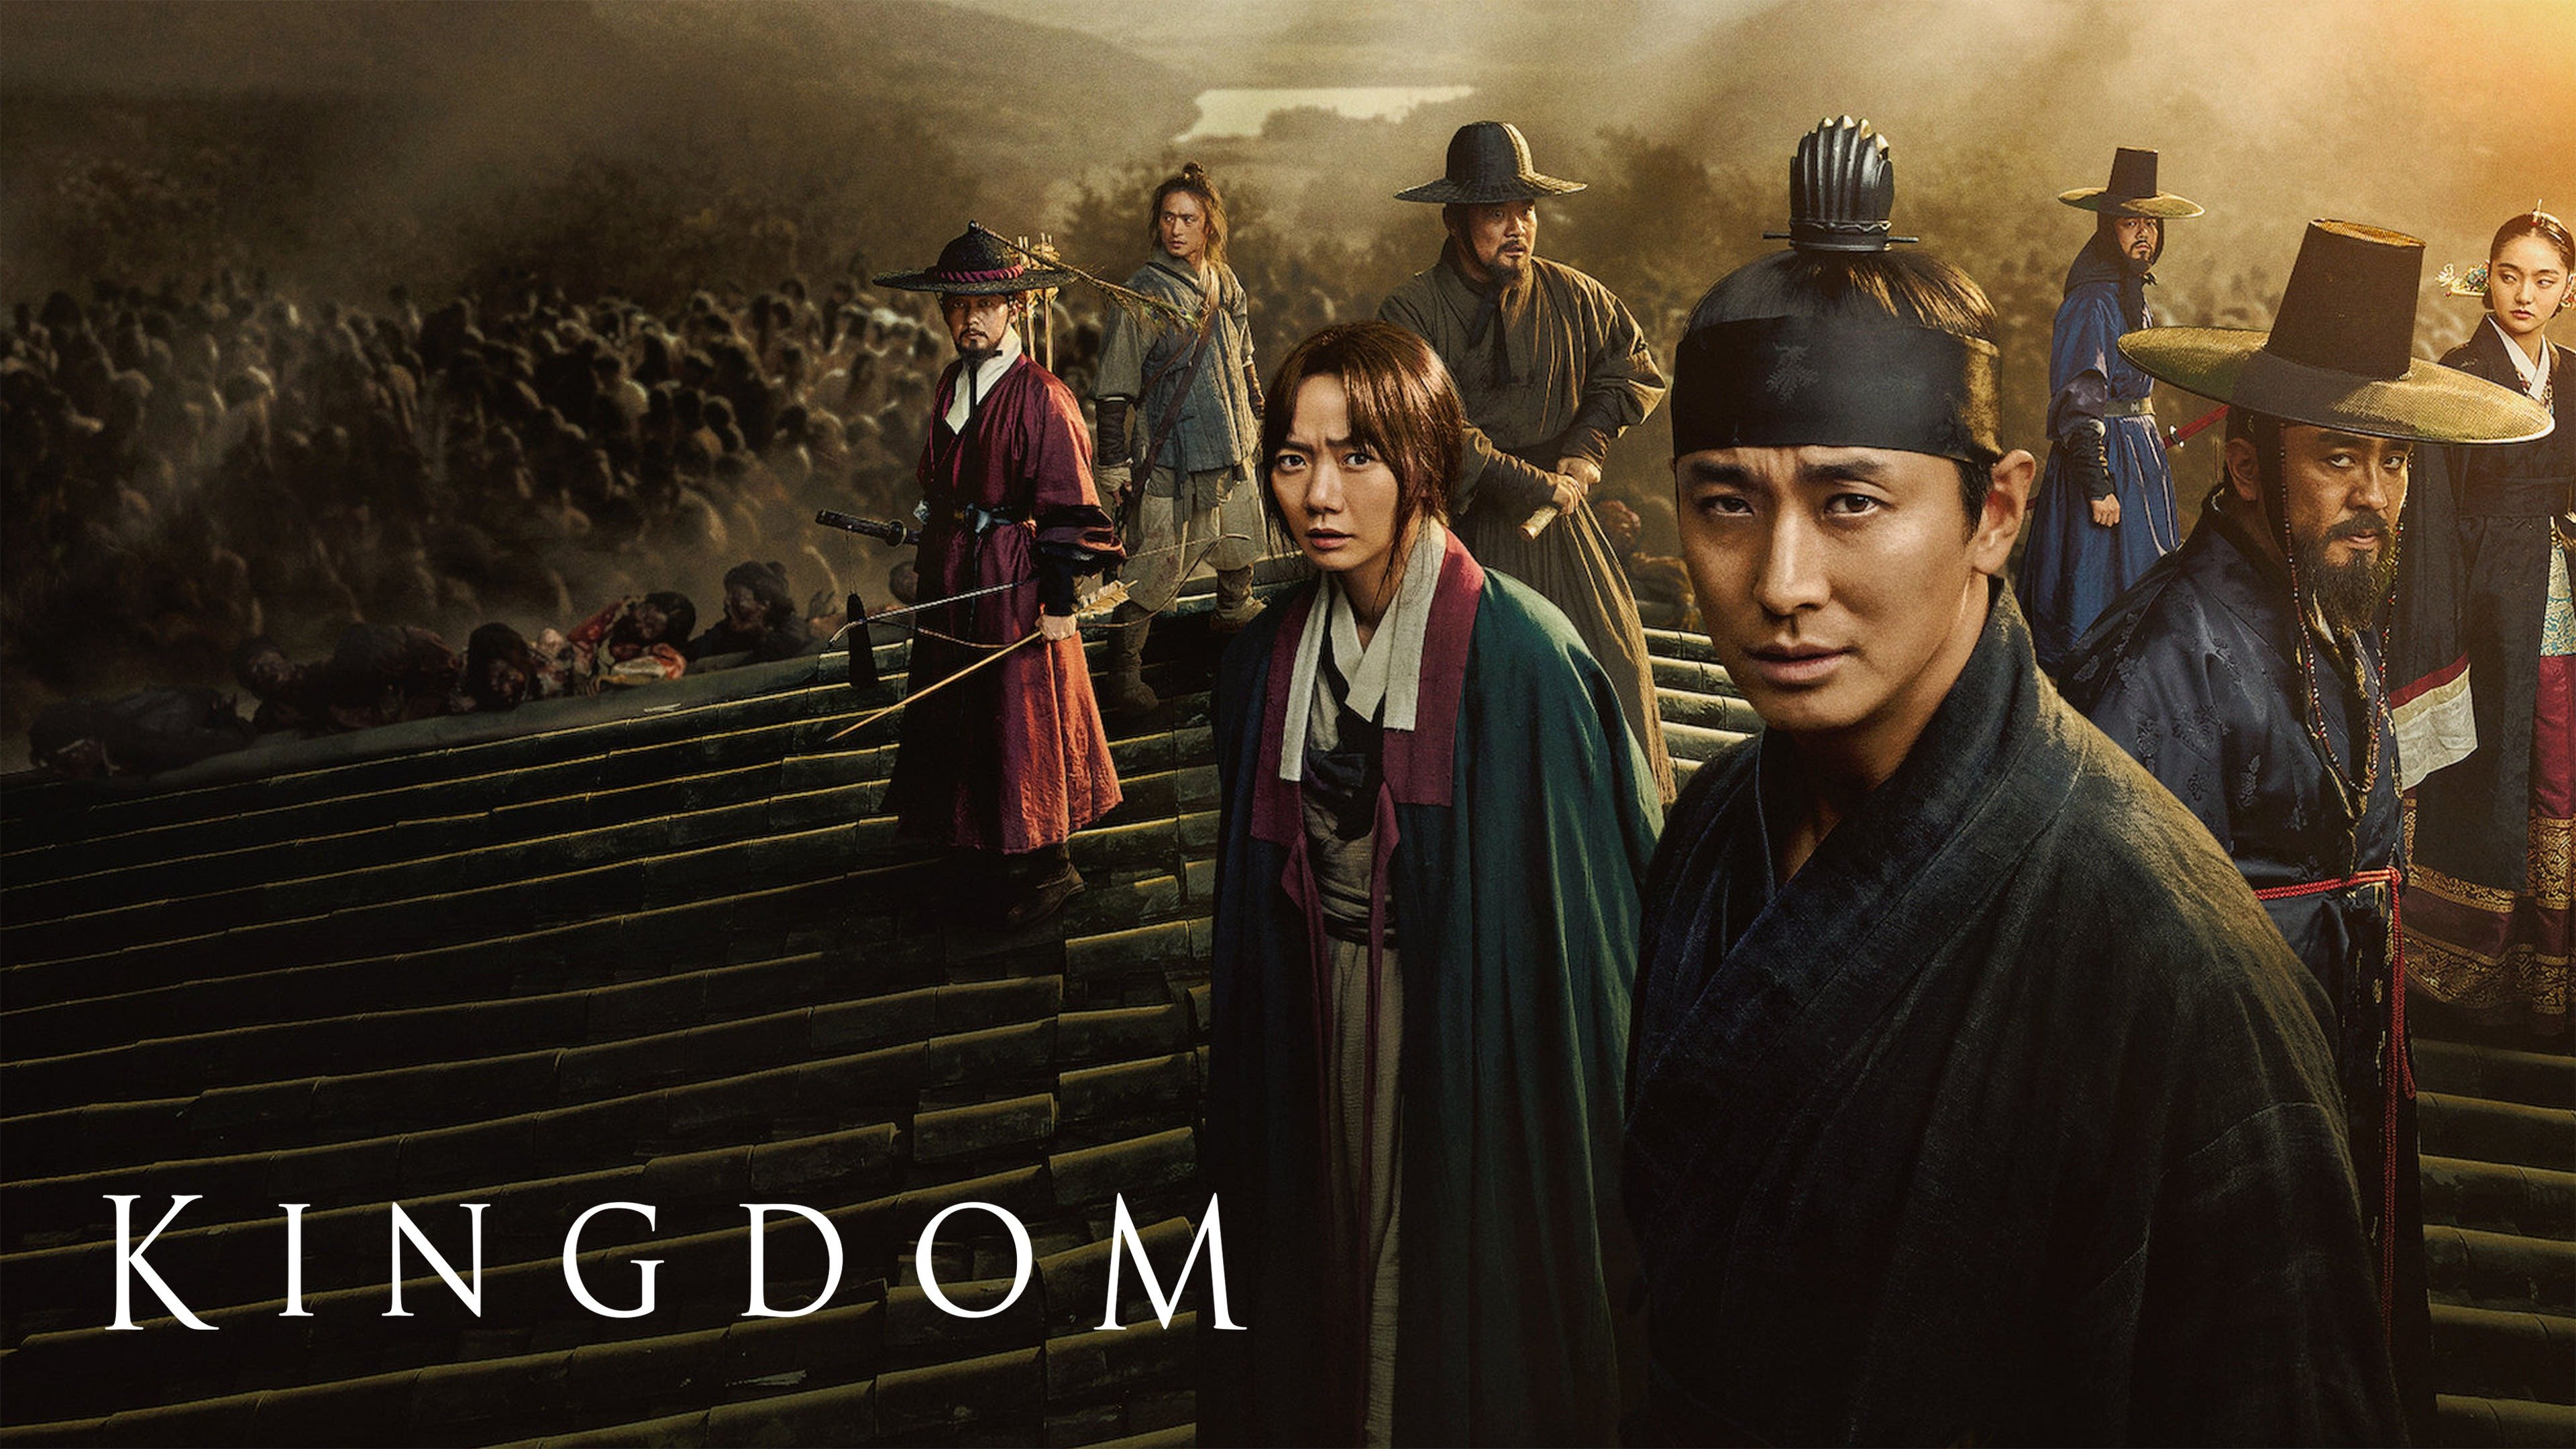 Kingdom streaming: where to watch movie online?